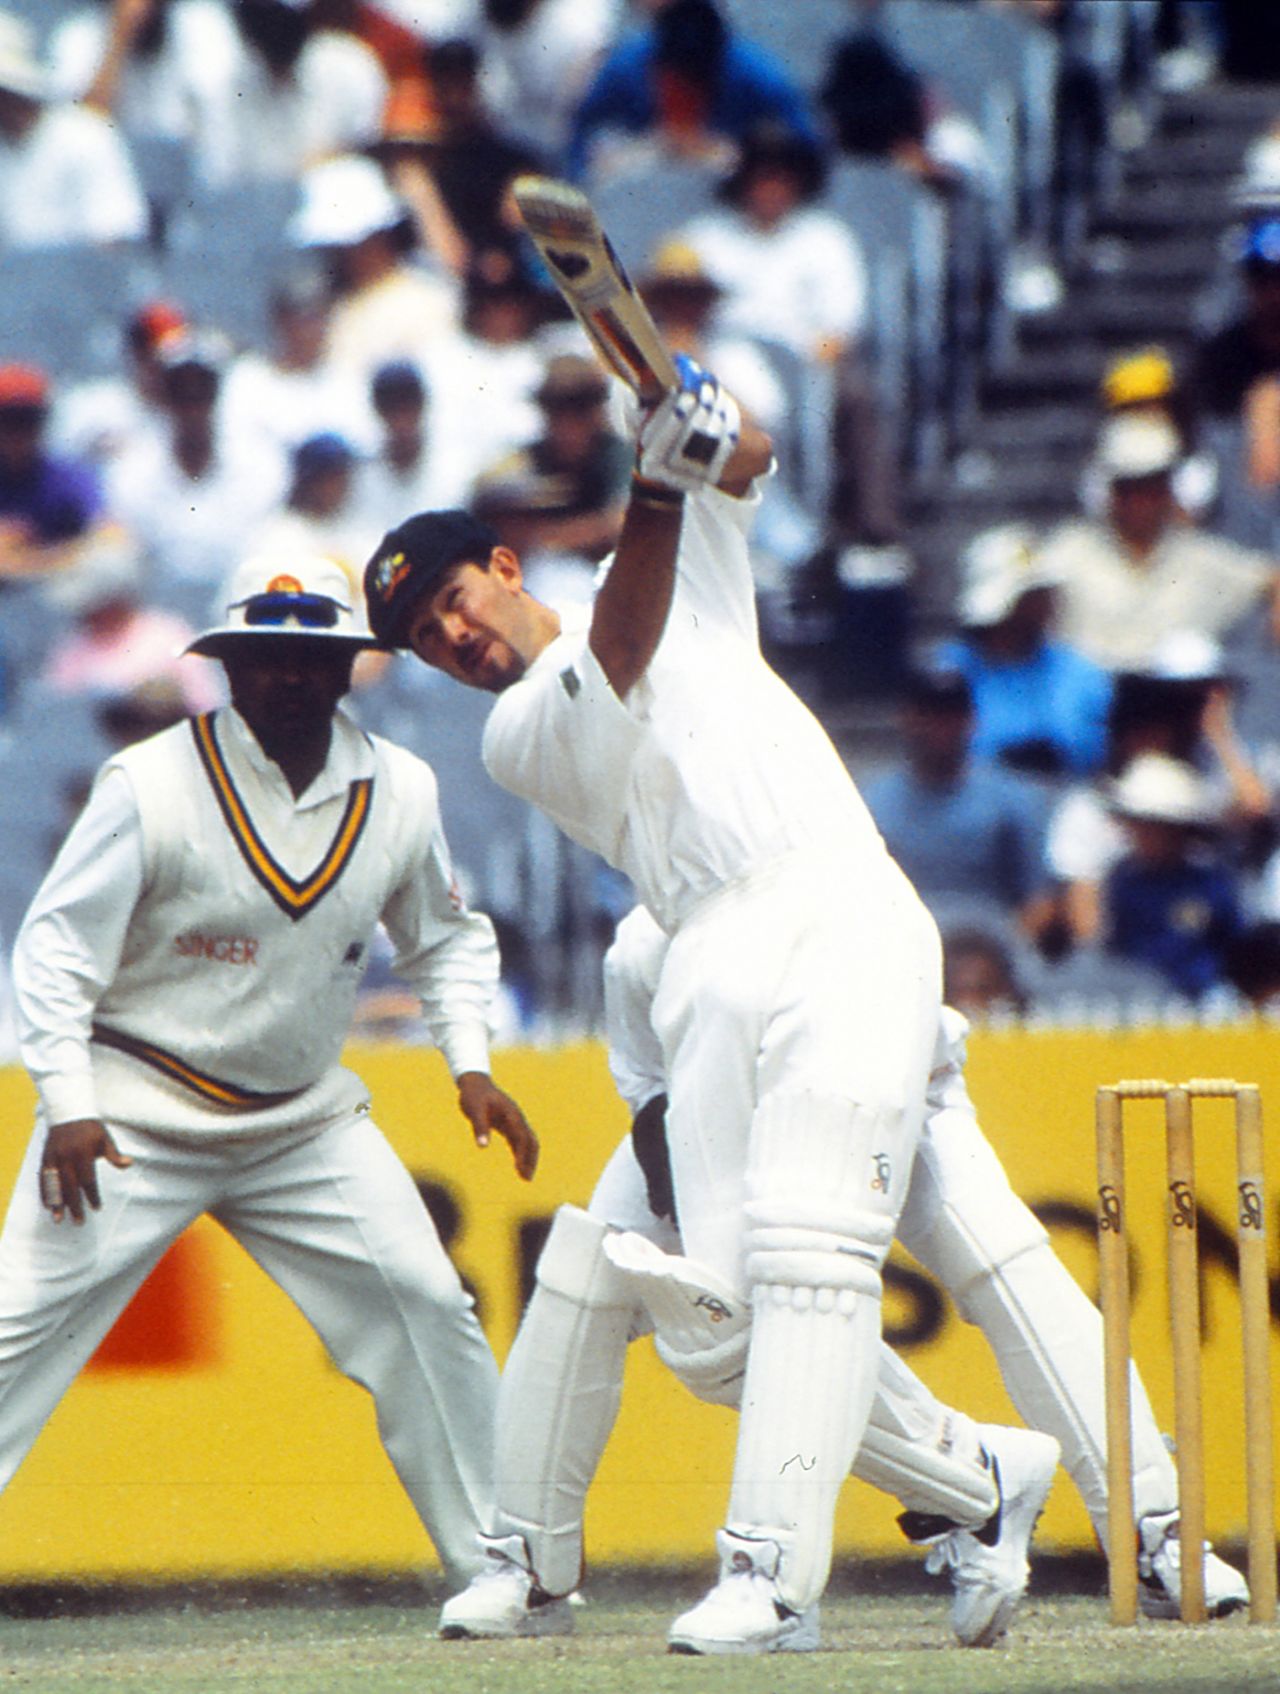 Ricky Ponting lofts one during his innings of 96, Australia v Sri Lanka, 1st Test, Perth, 3rd day, December 10, 1995